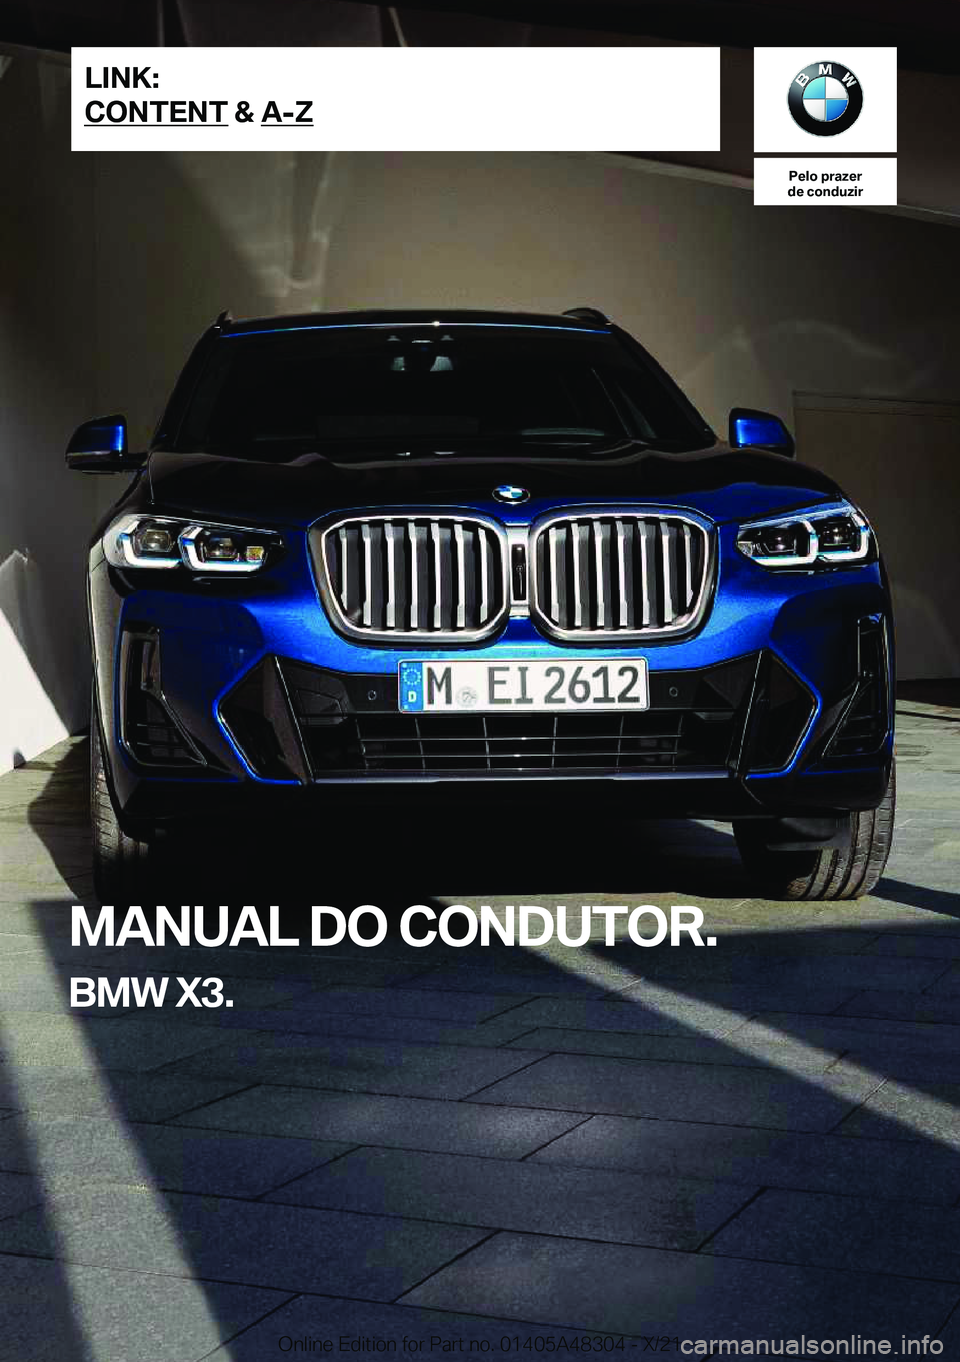 BMW X3 2022  Manual do condutor (in Portuguese) �P�e�l�o��p�r�a�z�e�r
�d�e��c�o�n�d�u�z�i�r
�M�A�N�U�A�L��D�O��C�O�N�D�U�T�O�R�.
�B�M�W��X�3�.�L�I�N�K�:
�C�O�N�T�E�N�T��&��A�-�Z�O�n�l�i�n�e��E�d�i�t�i�o�n��f�o�r��P�a�r�t��n�o�.��0�1�4�0